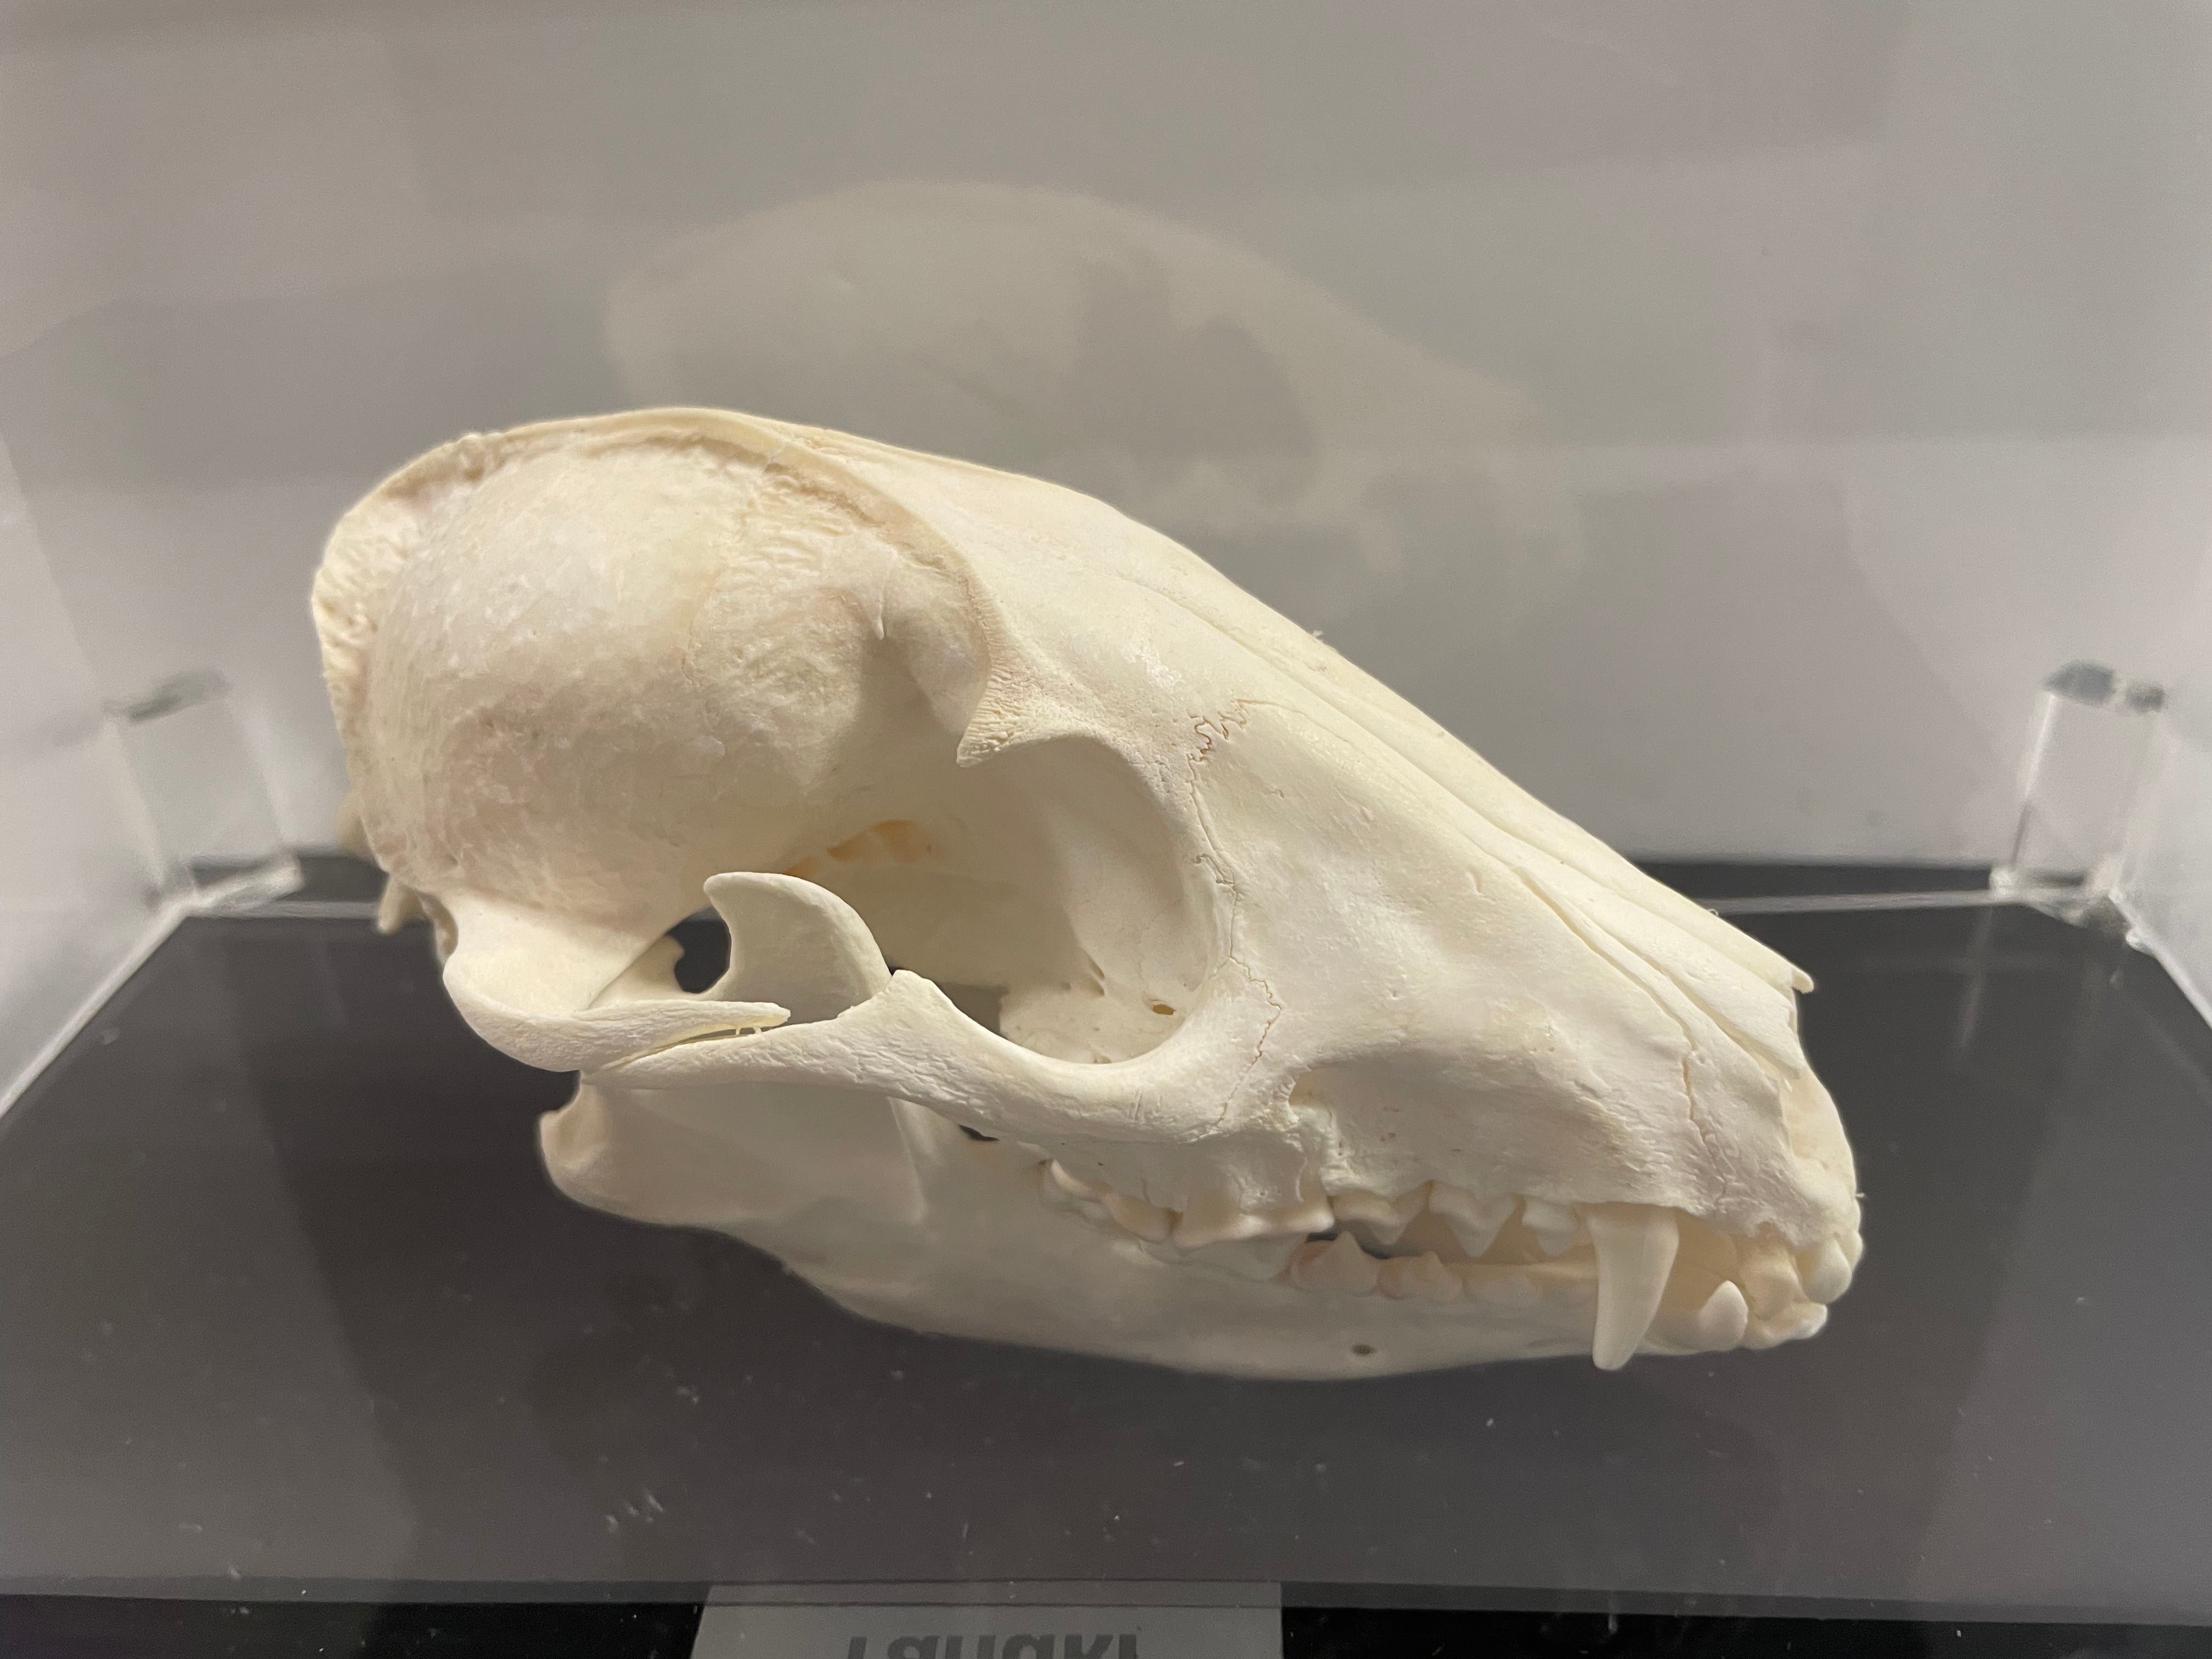 Tanuki Skull